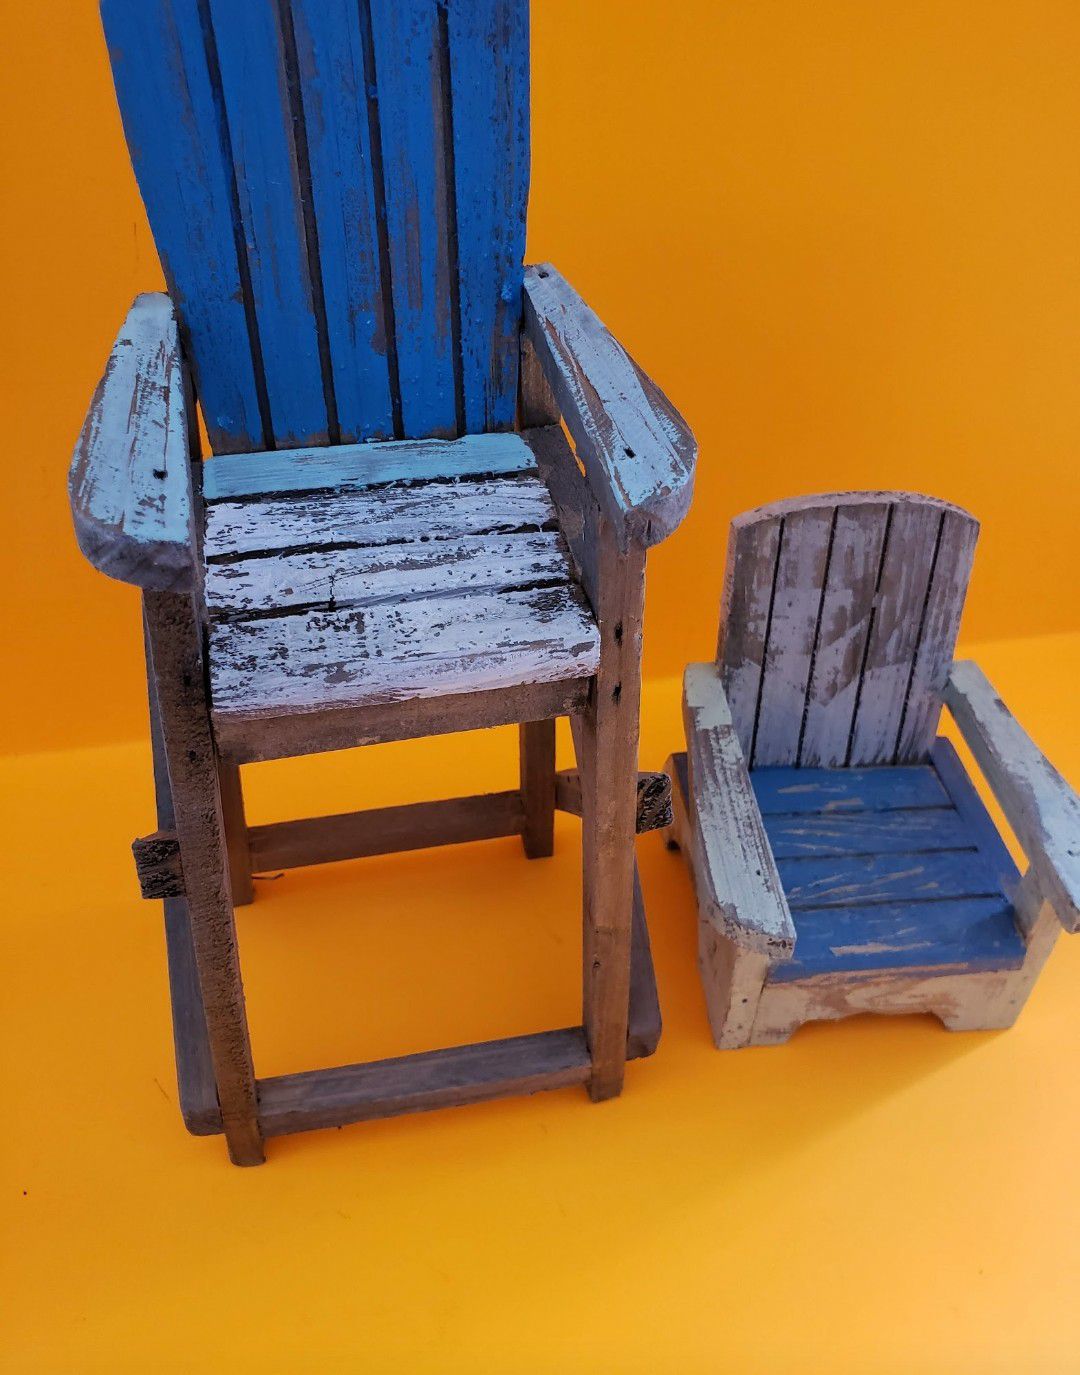 New nautical decor wood chairs fro shelf decor